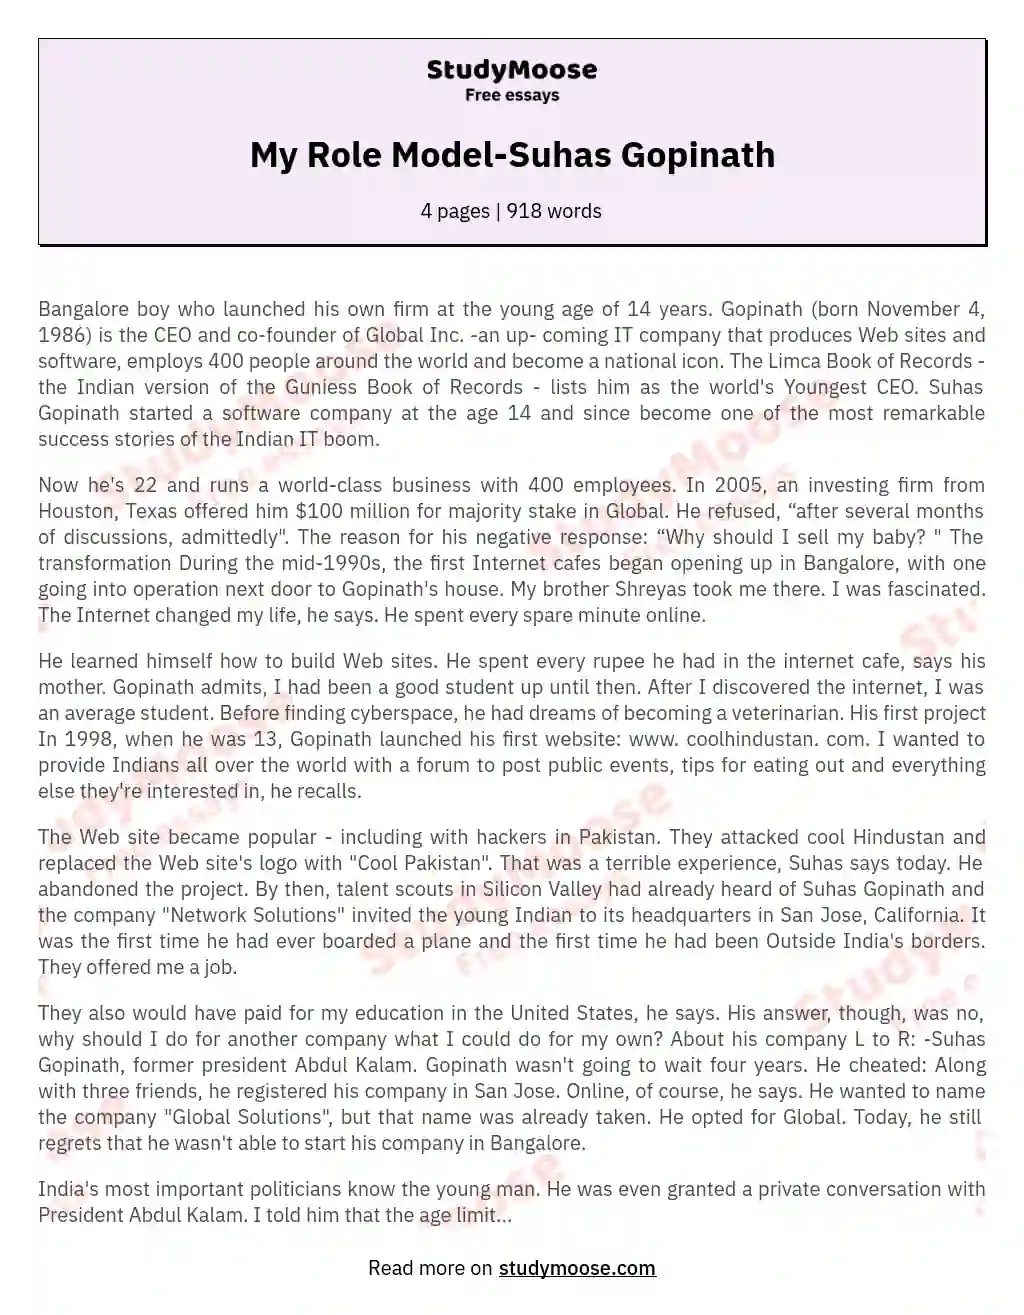 My Role Model-Suhas Gopinath essay